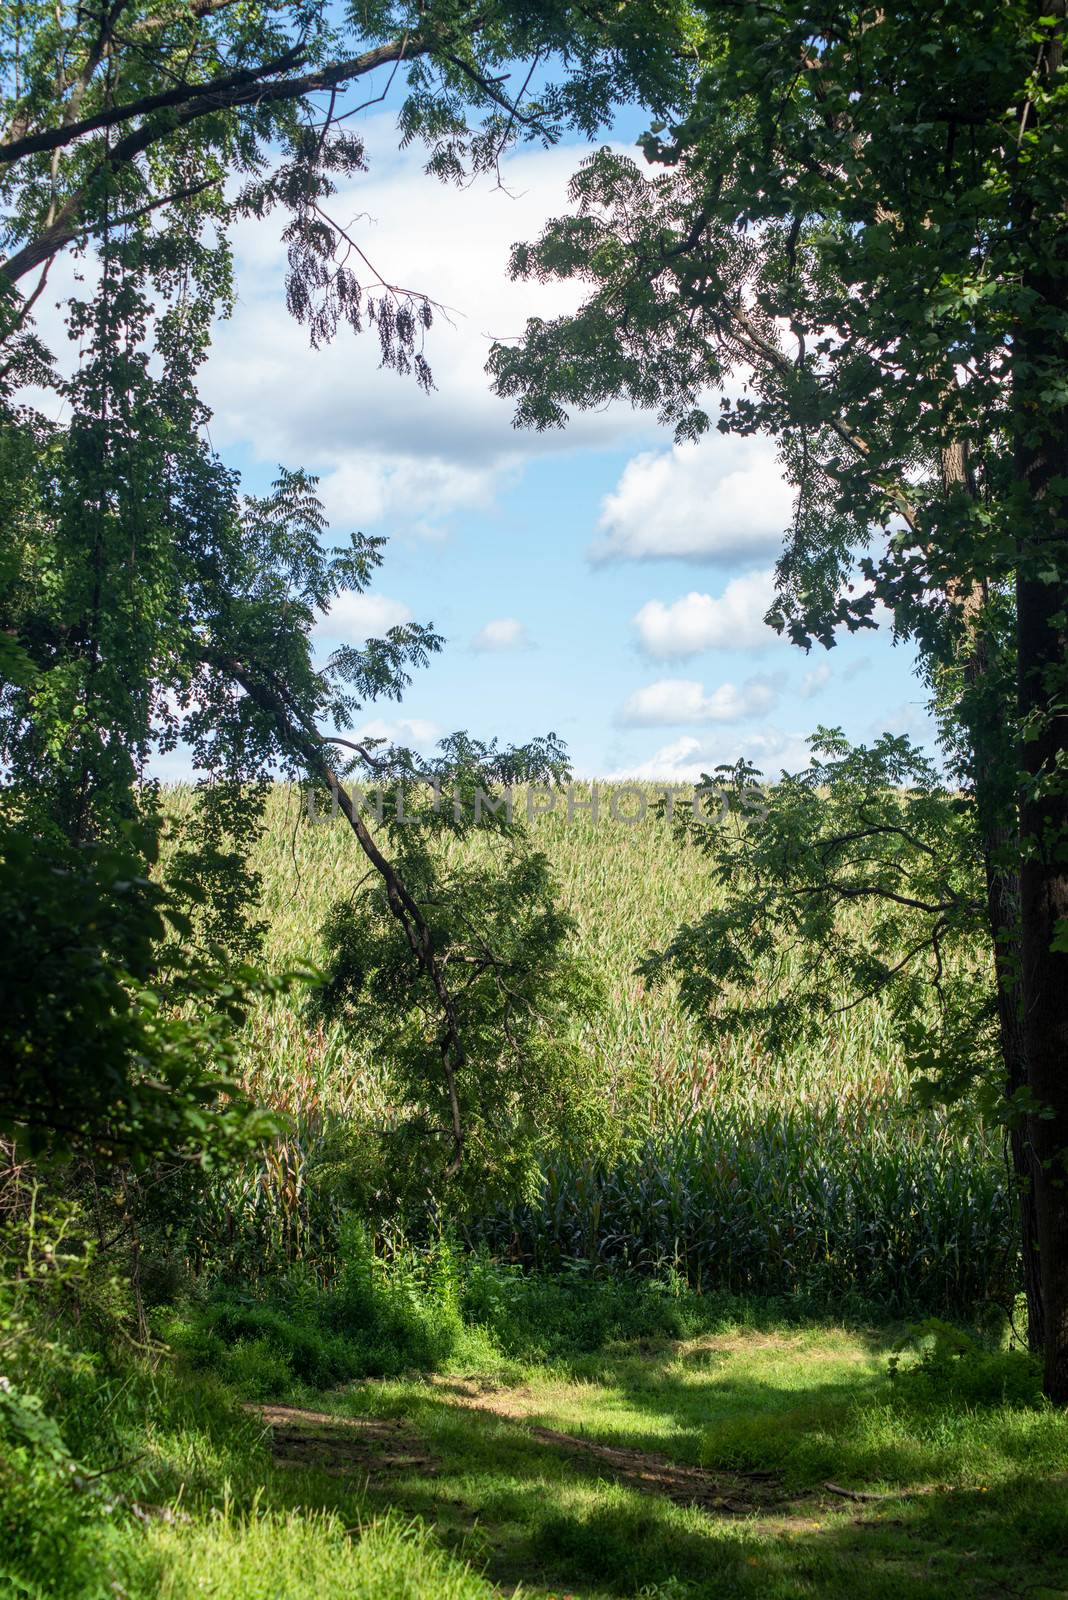 Forest path opens onto idyllic field and blue sky by marysalen